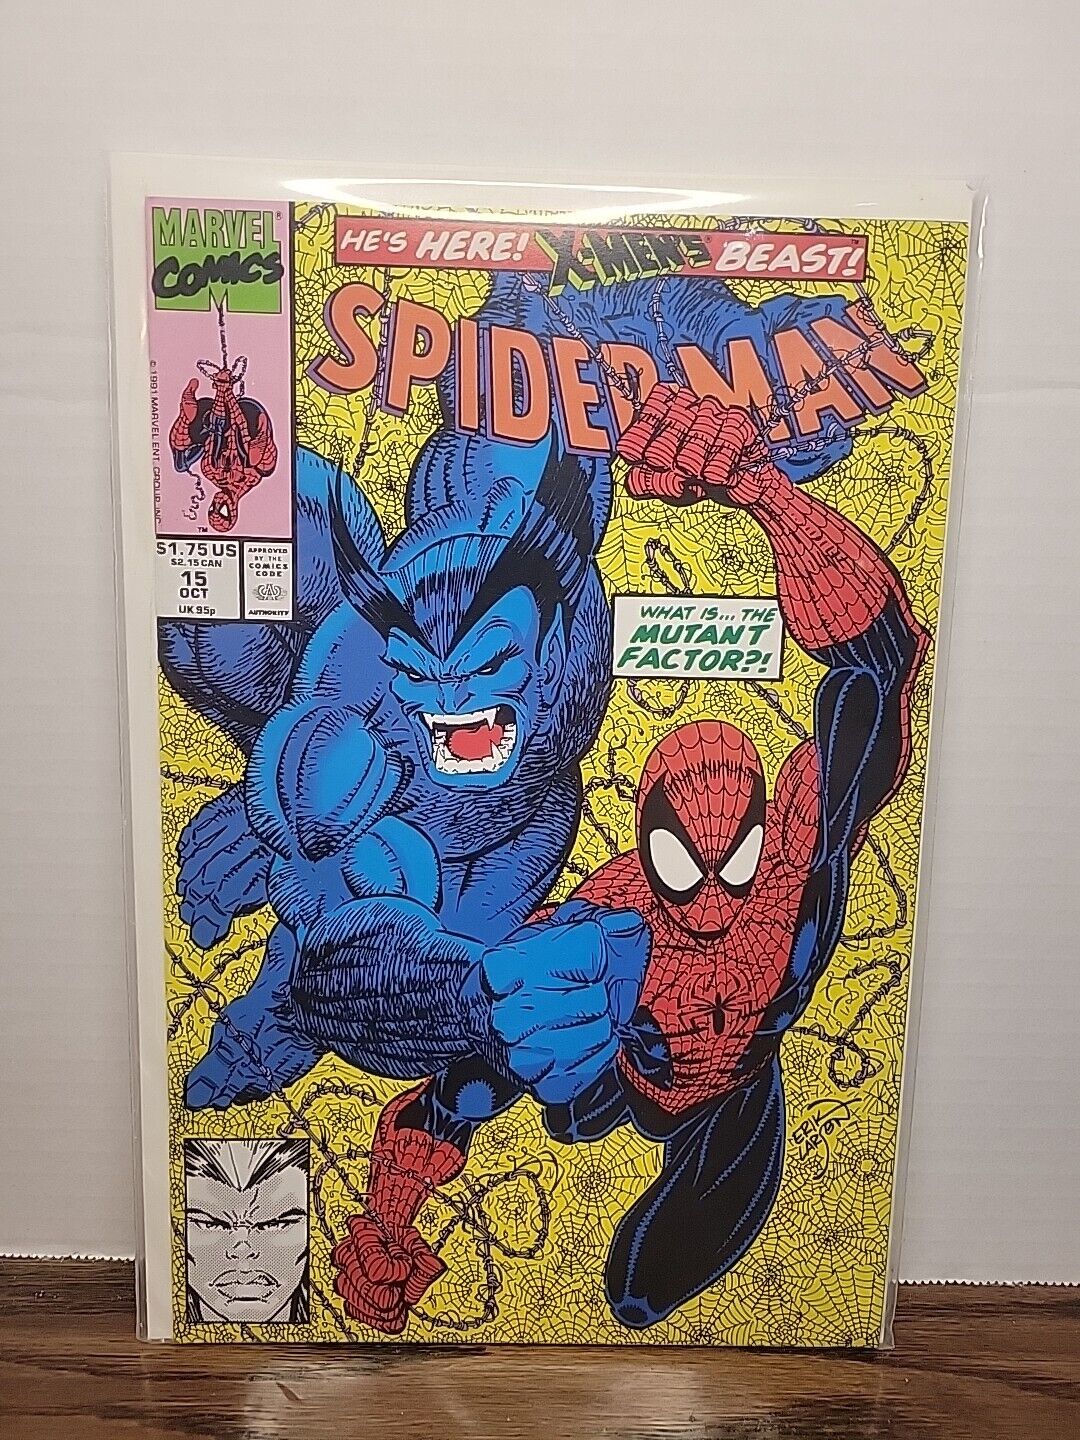 Marvel Comics Spider- Man  (featuring THE BEAST / X-MEN)  #15  Oct. 1991  Comic